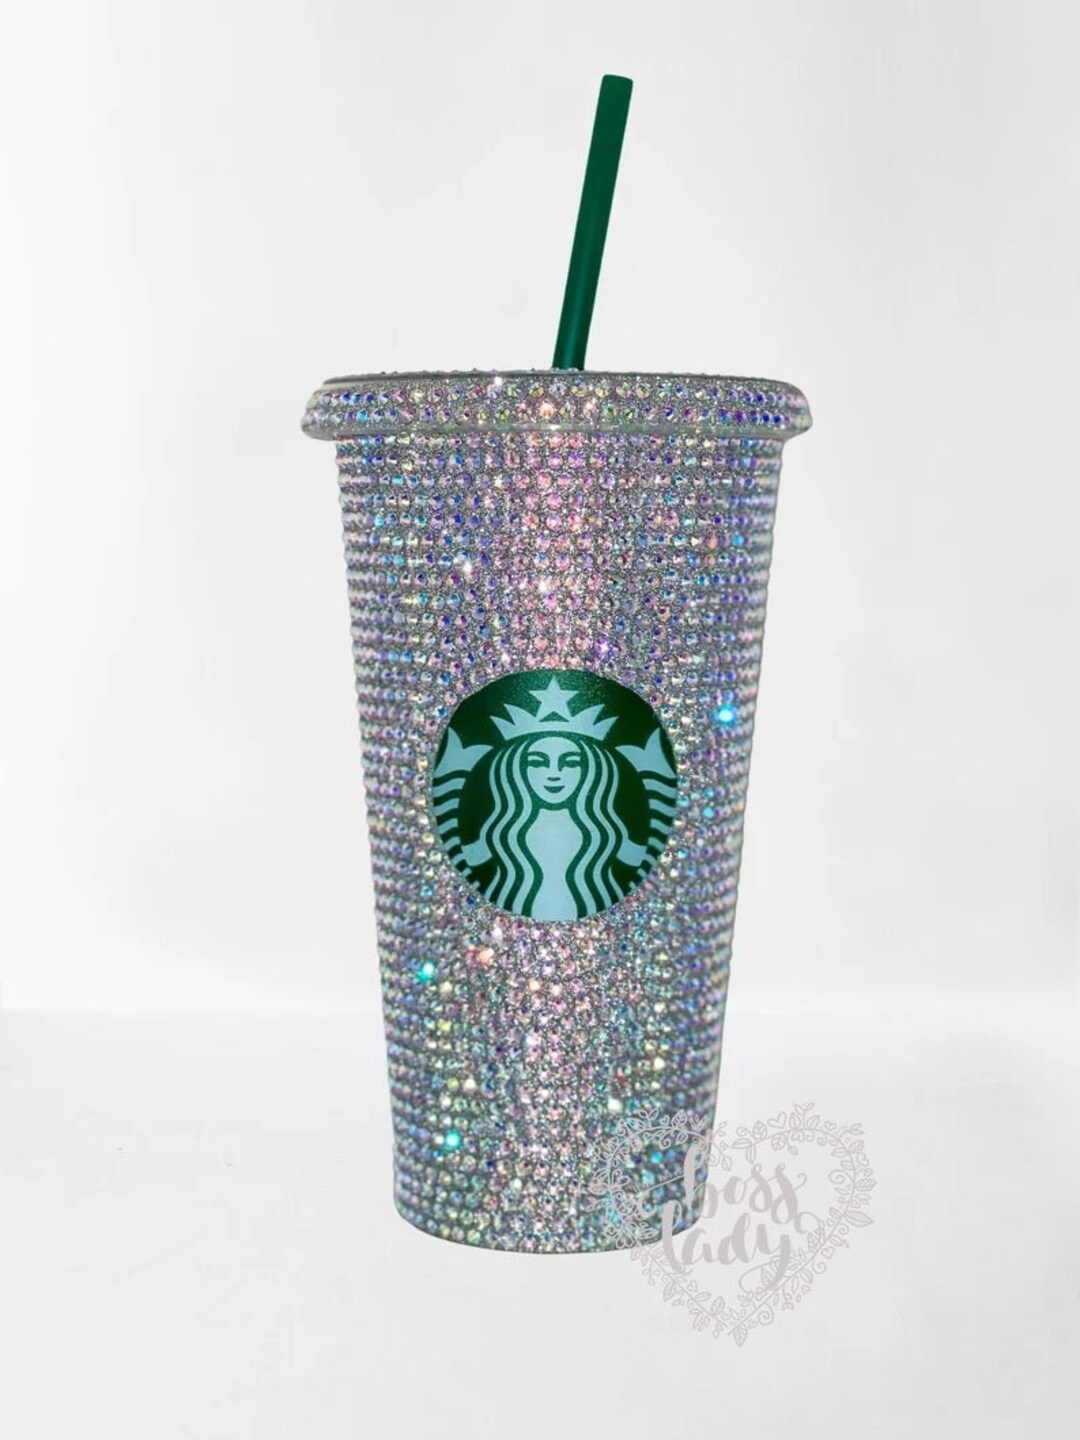 Starbucks Acrylic Tumbler with Red Diamond Cut Crystals